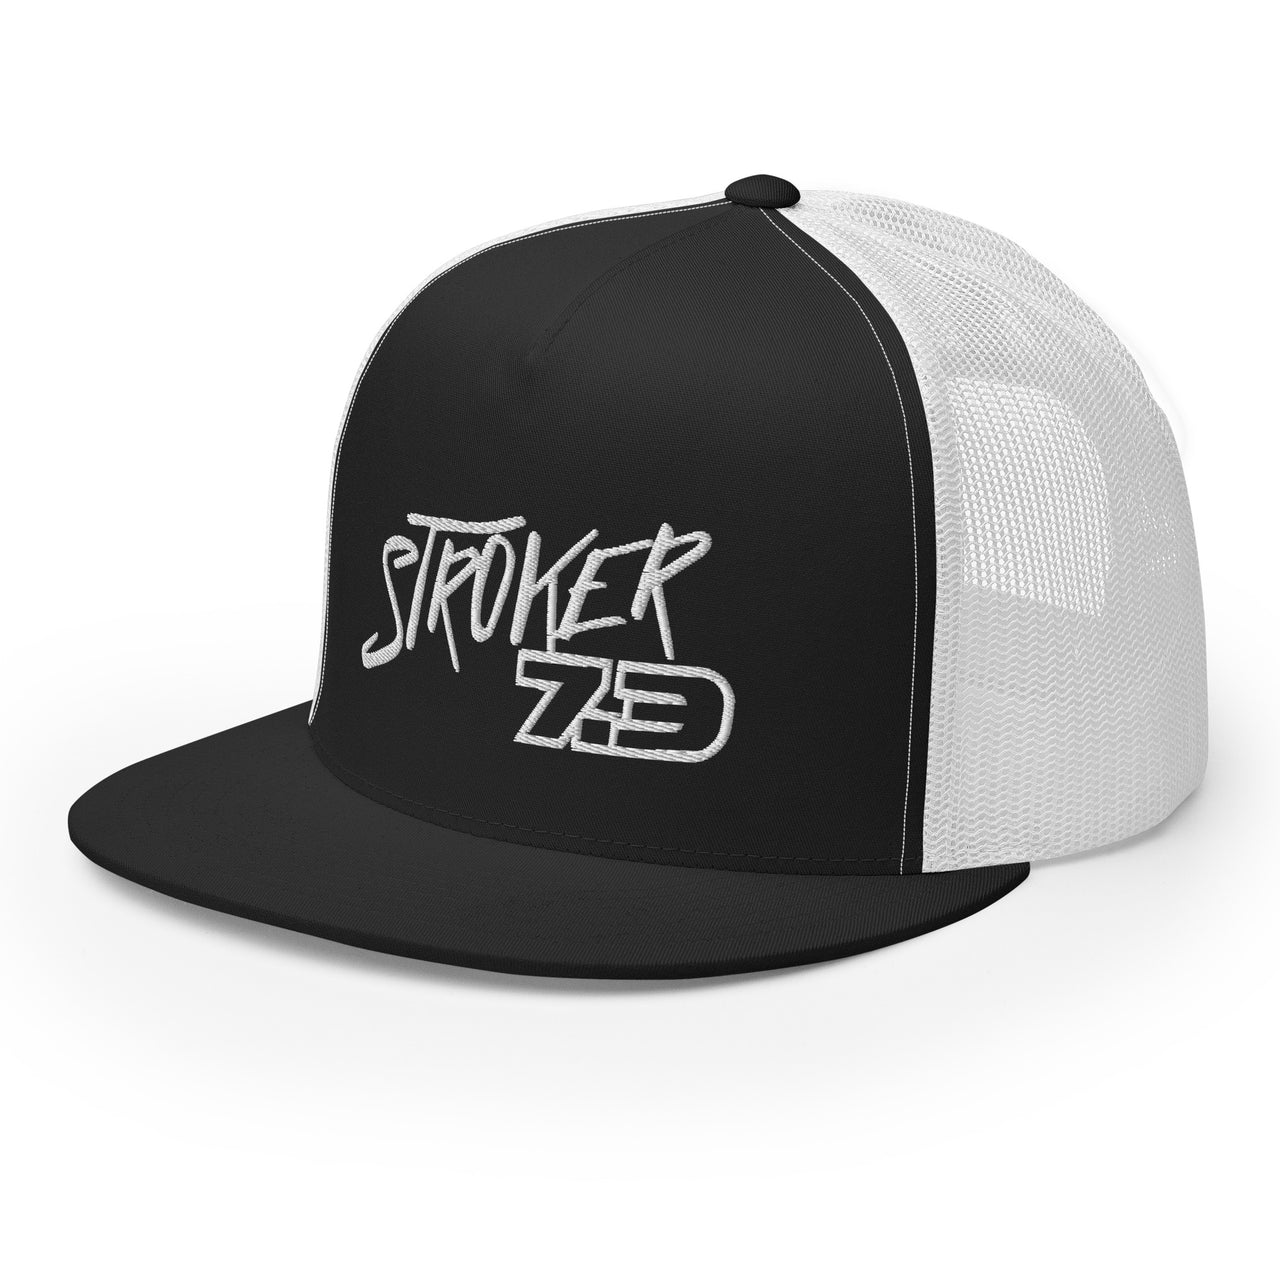 7.3 power stroke diesel trucker hat in black and white - left view